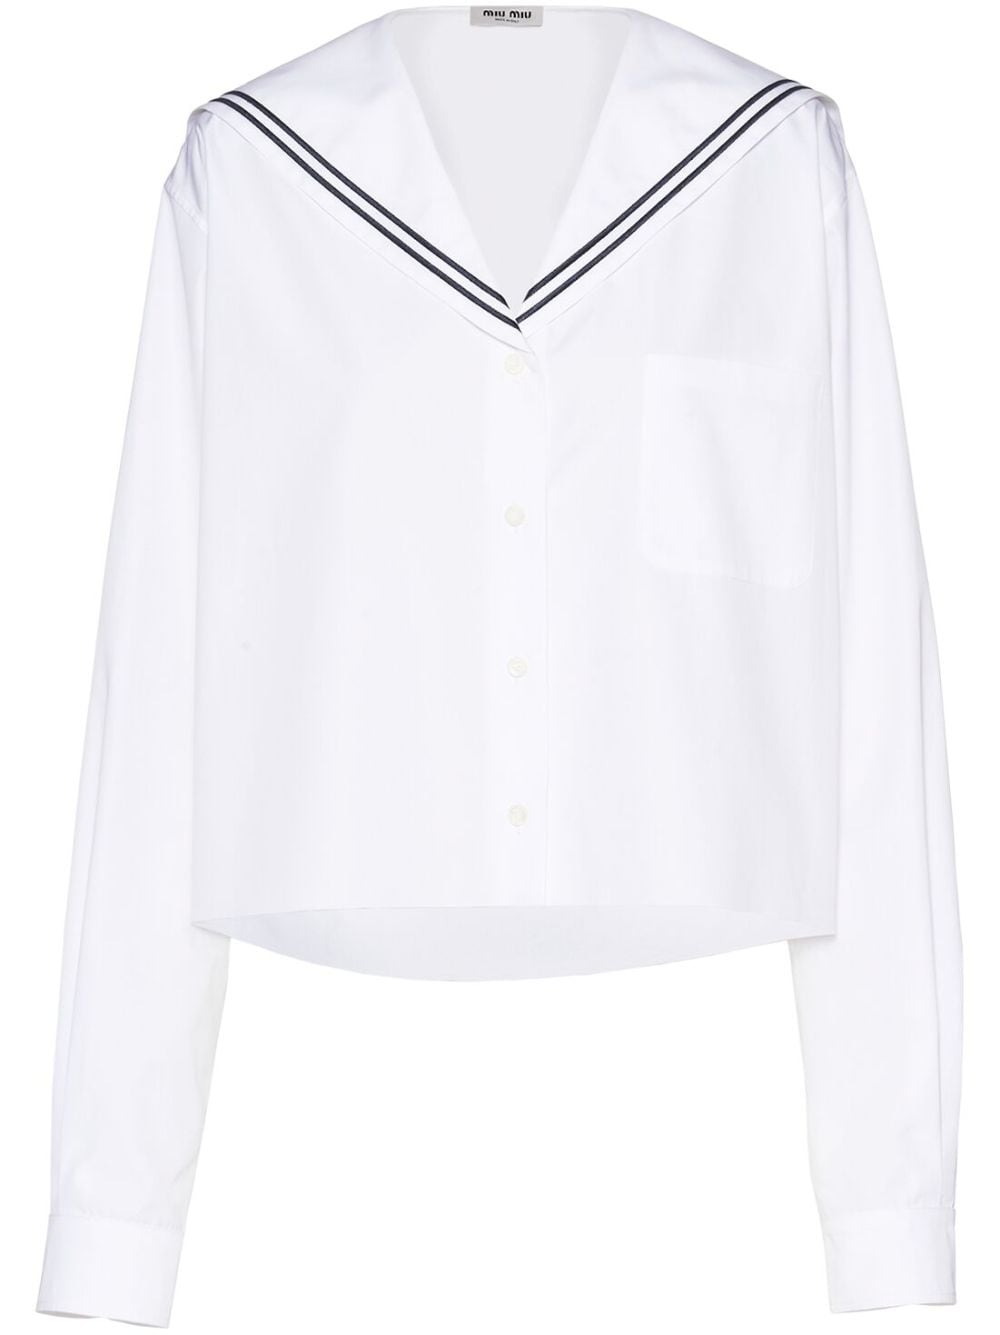 Miu Miu sailor poplin shirt - White von Miu Miu